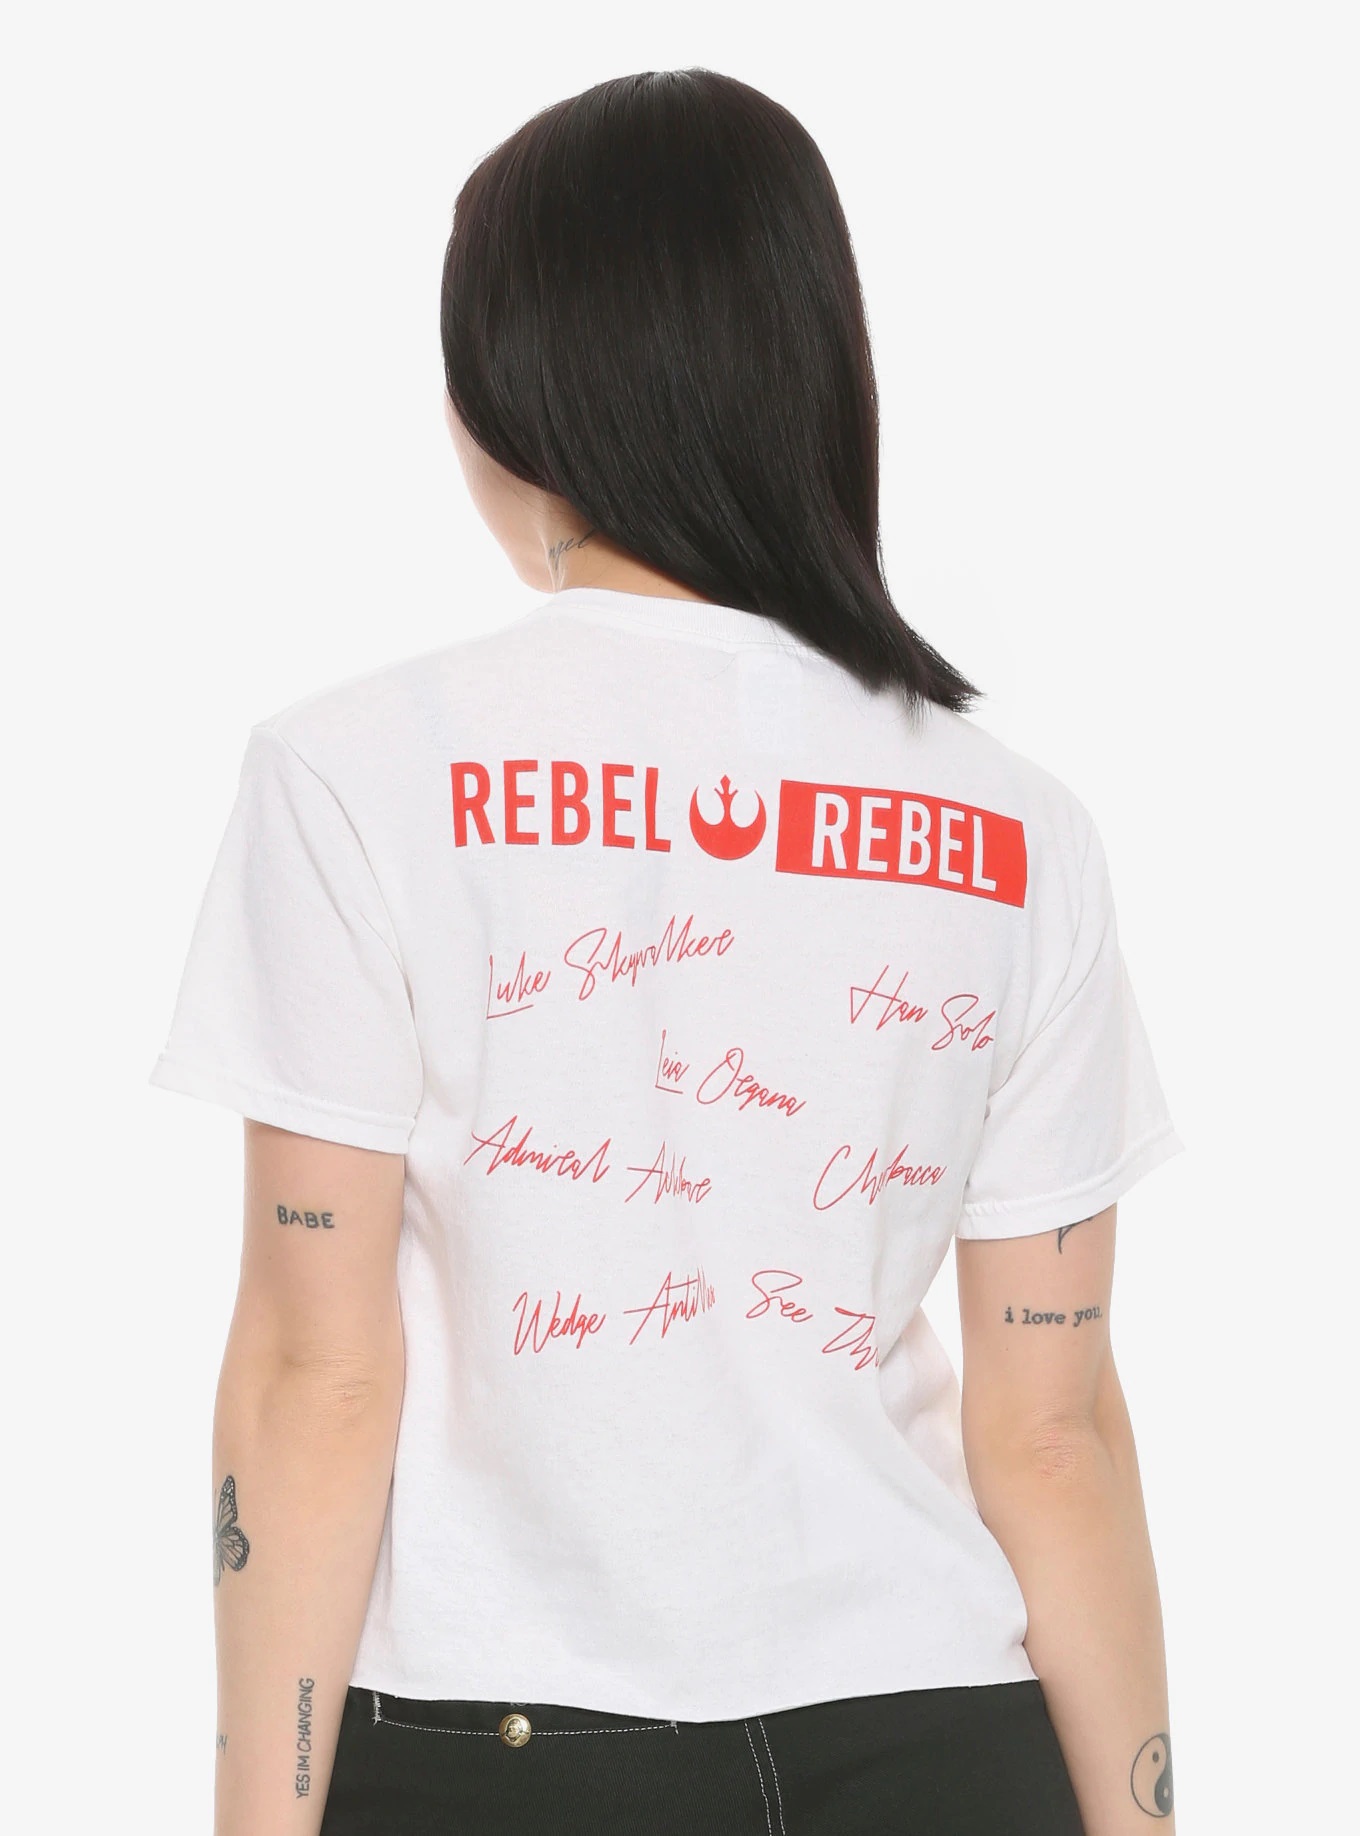 Women's Star Wars Rebel Roll Call T-Shirt at Hot Topic